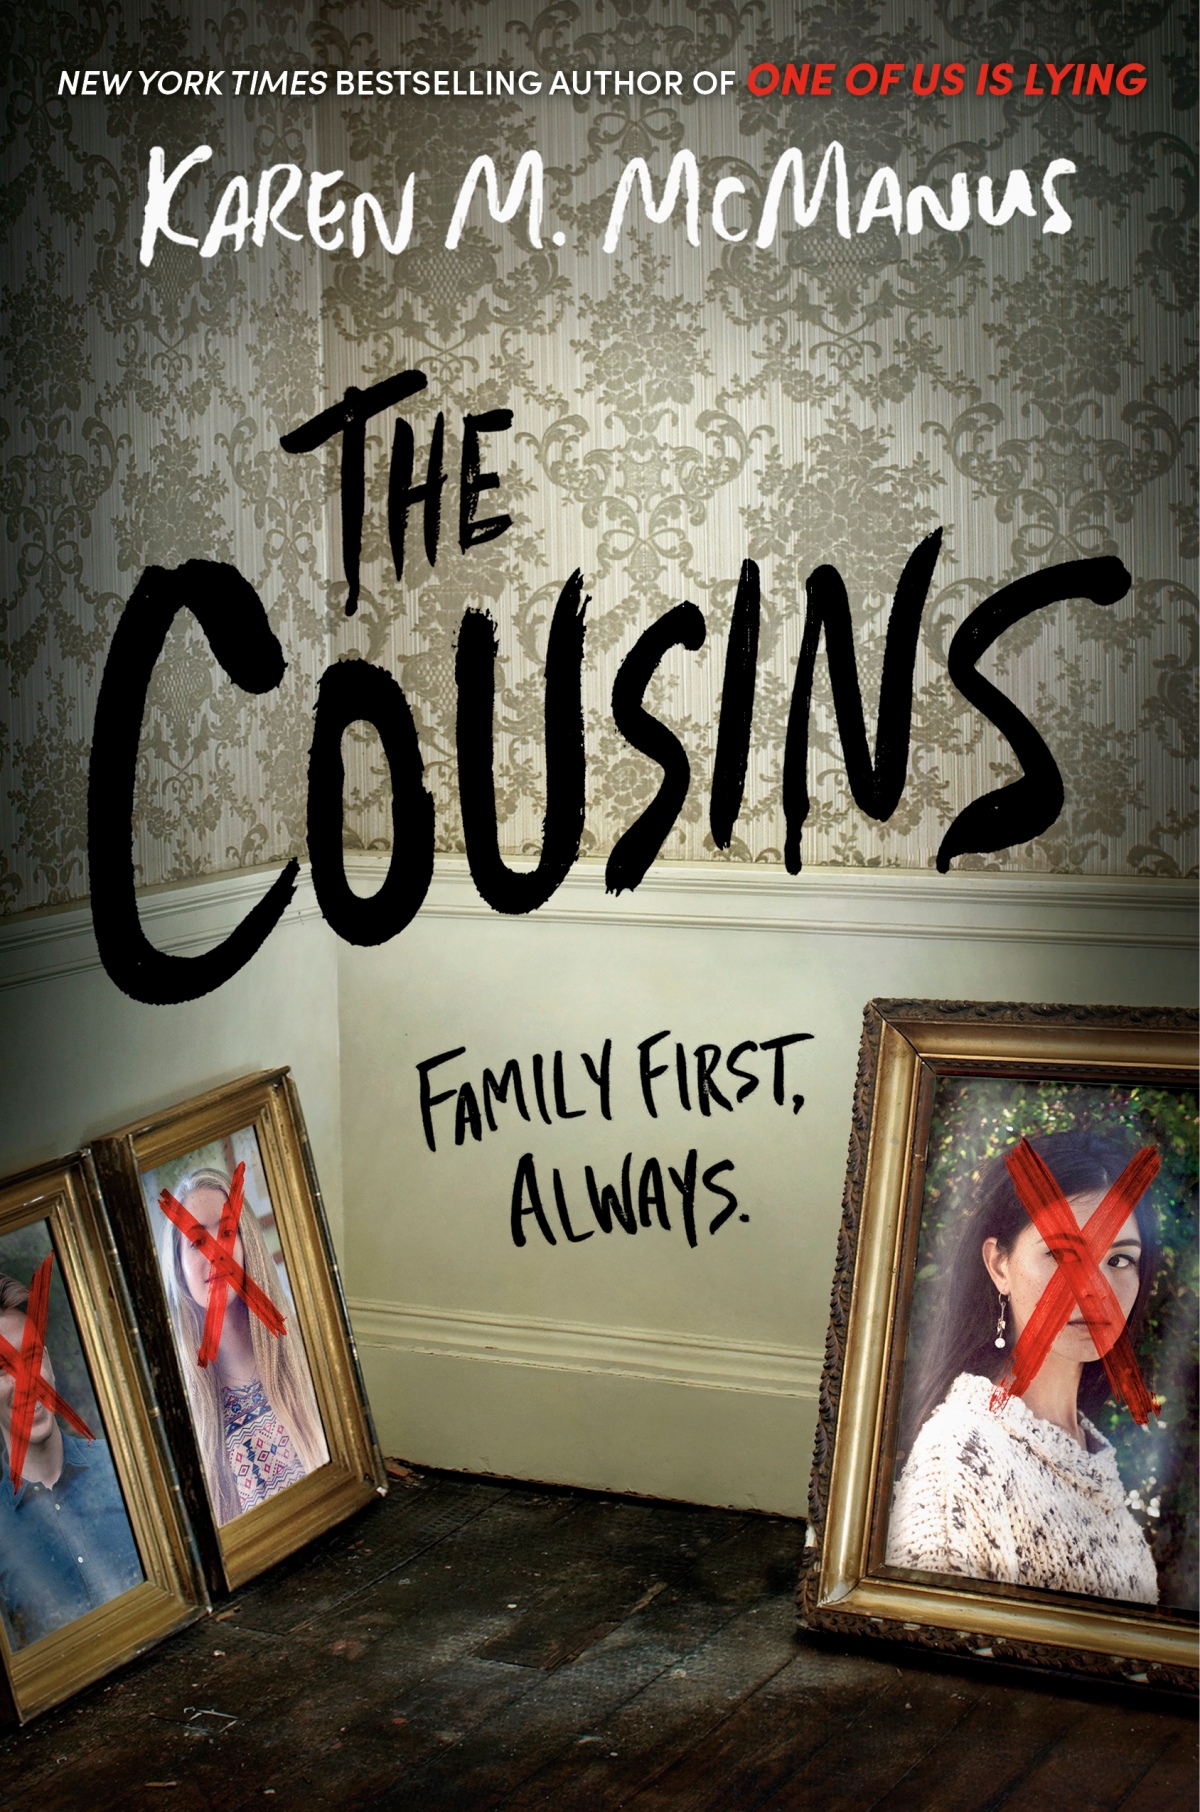 Book 7 – The Cousins by Karen M. McManus